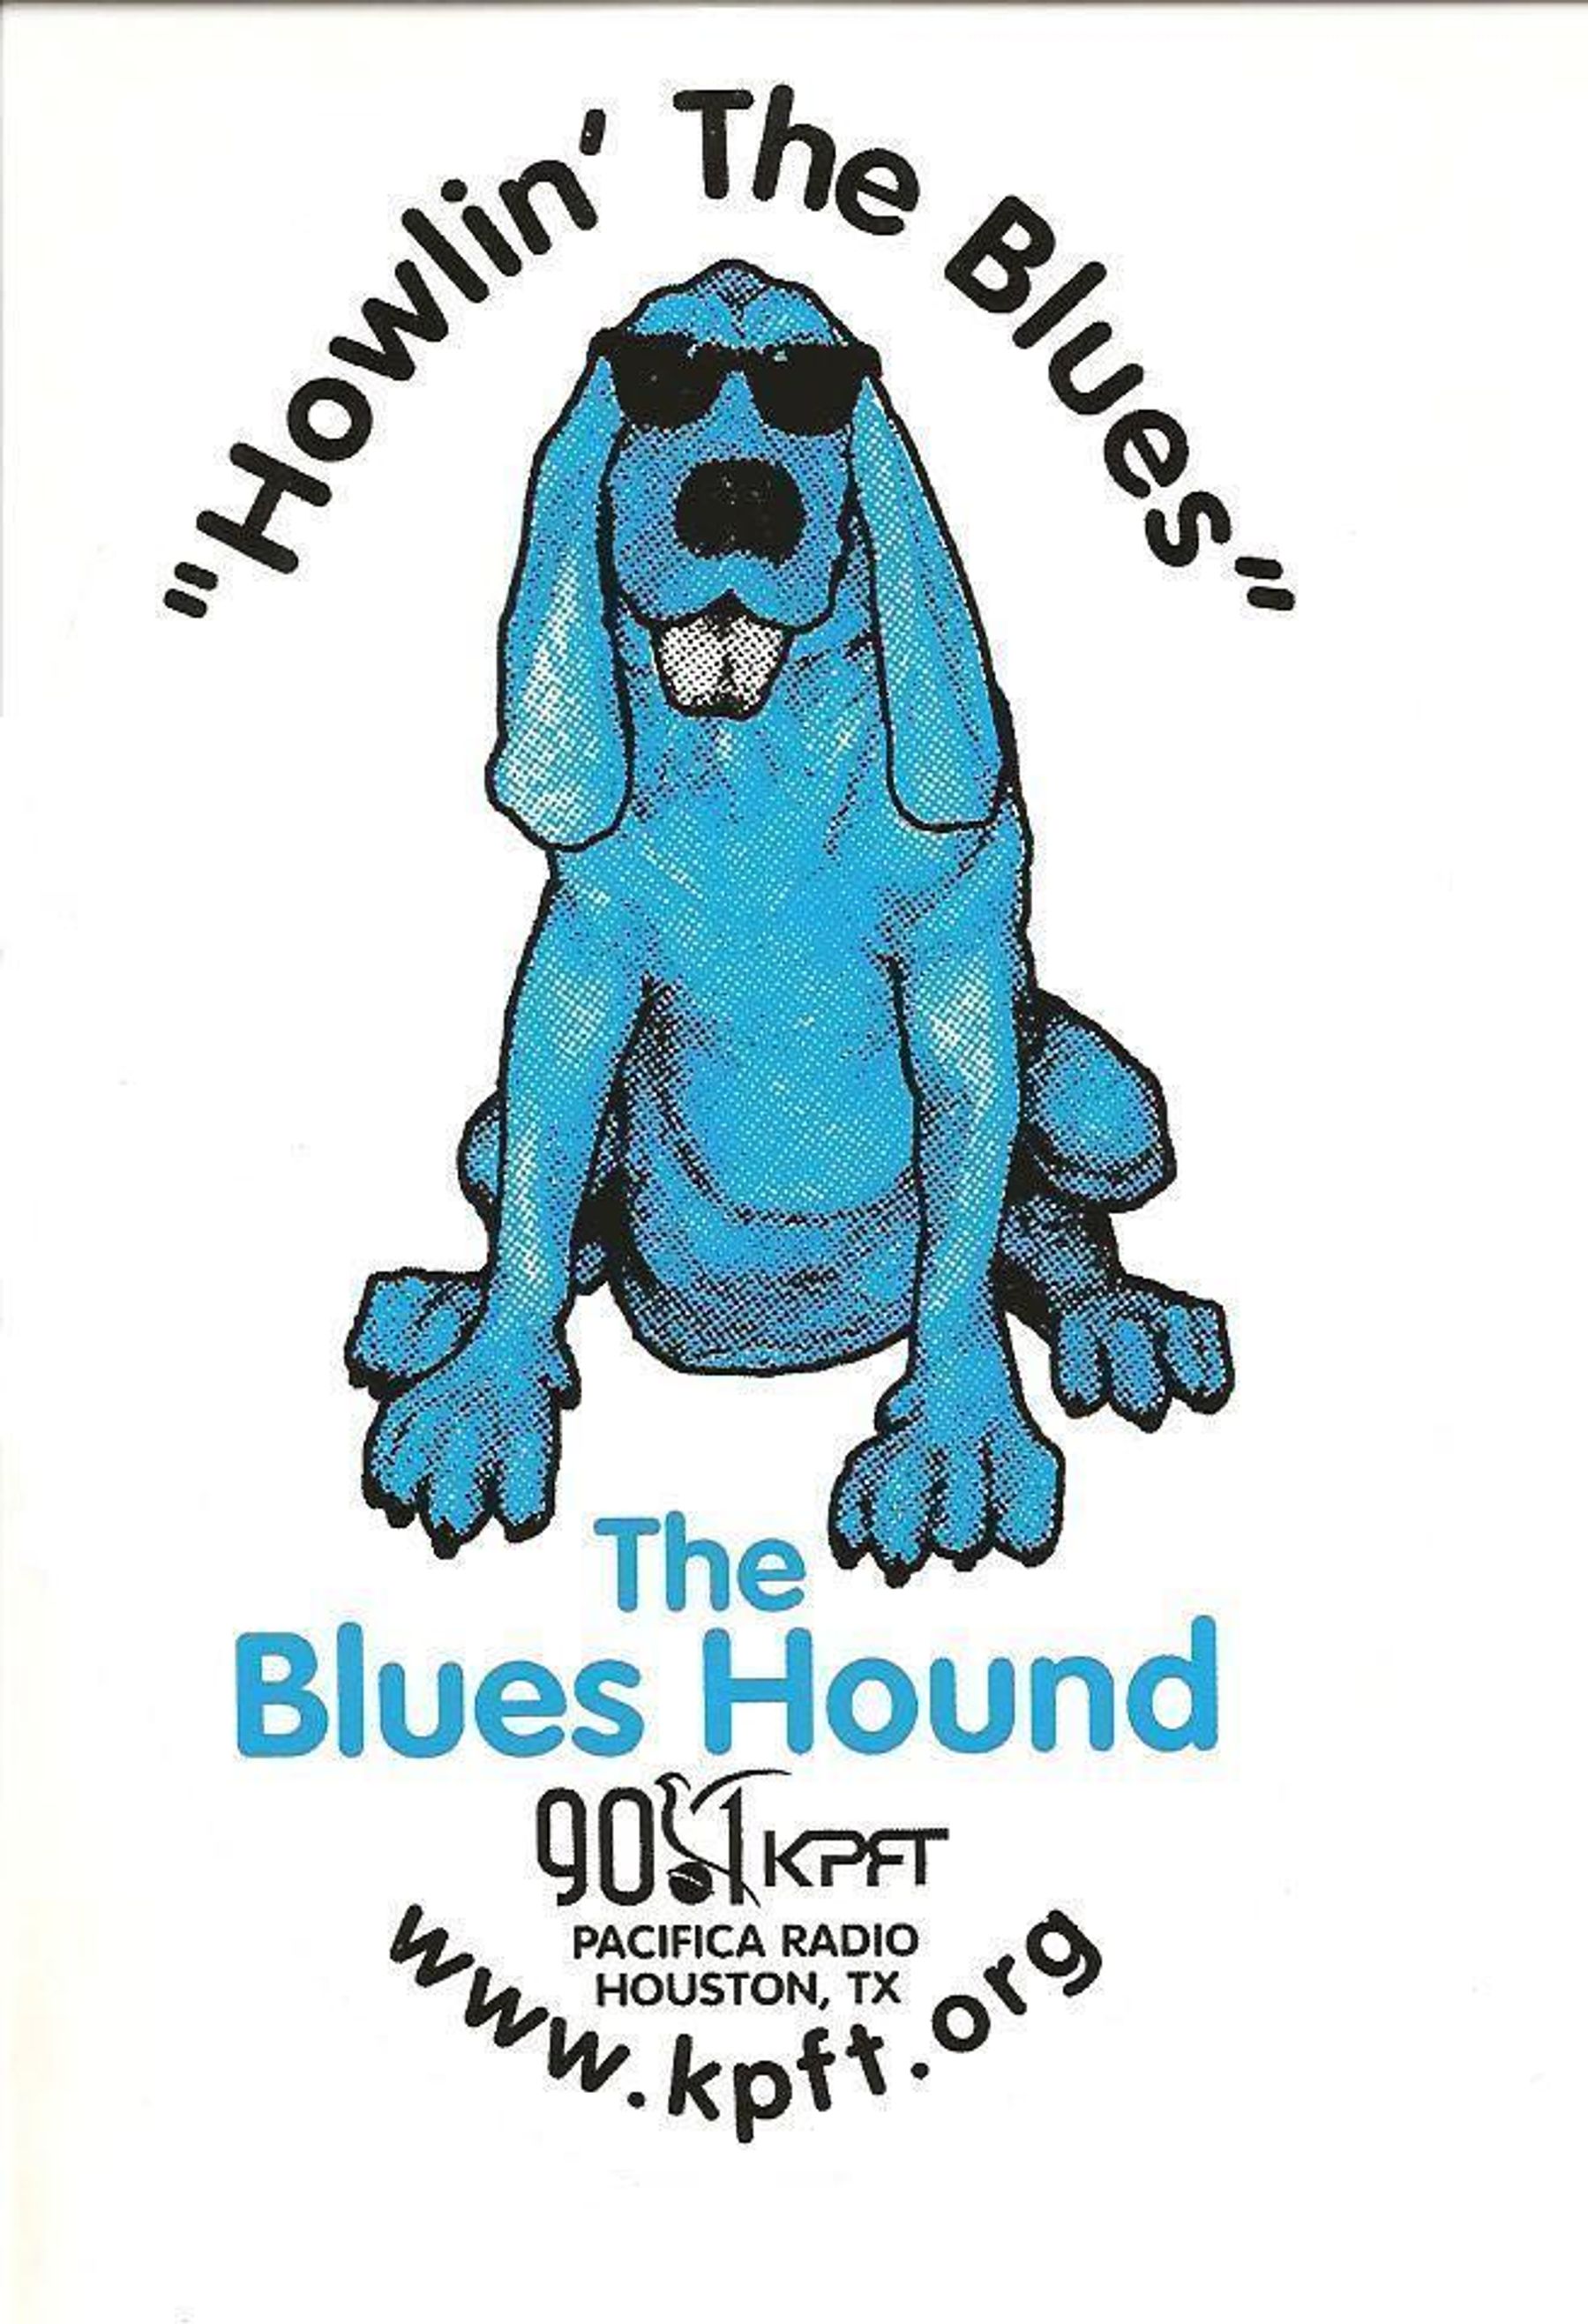 The Blues Hound - Playlists - Howlin' the Blues